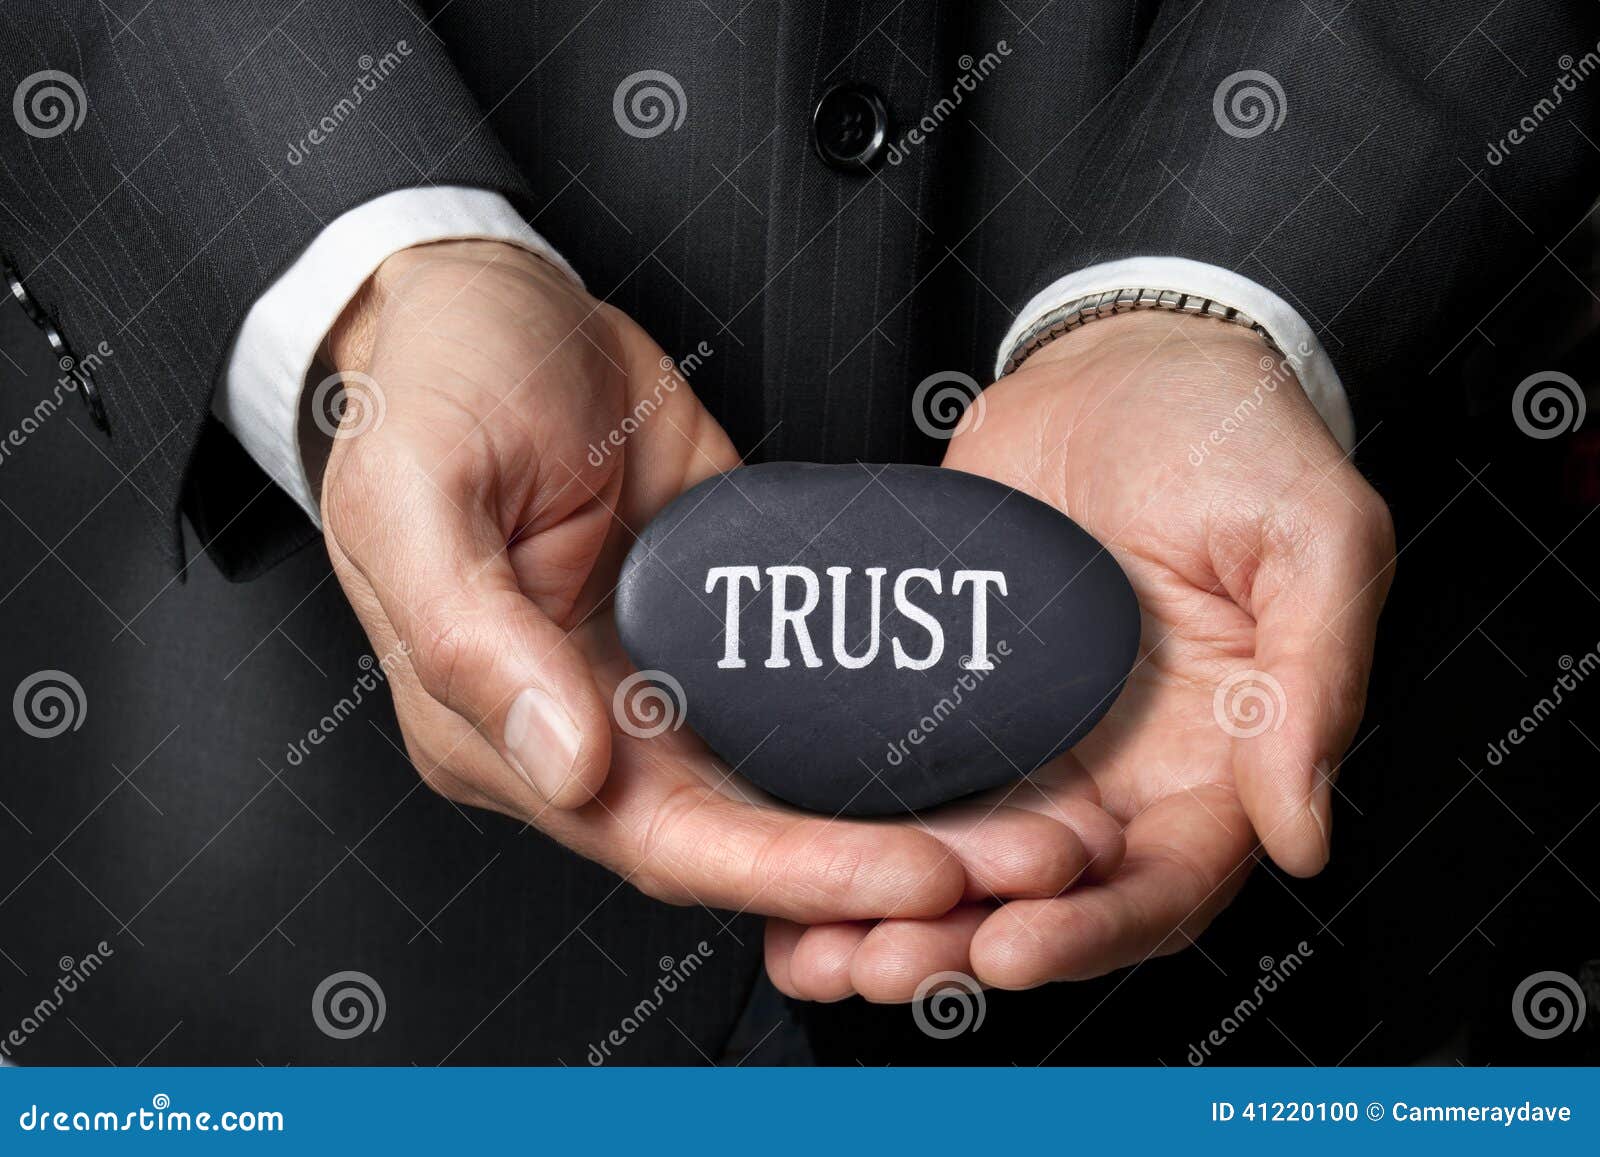 trust hands business ethics insurance